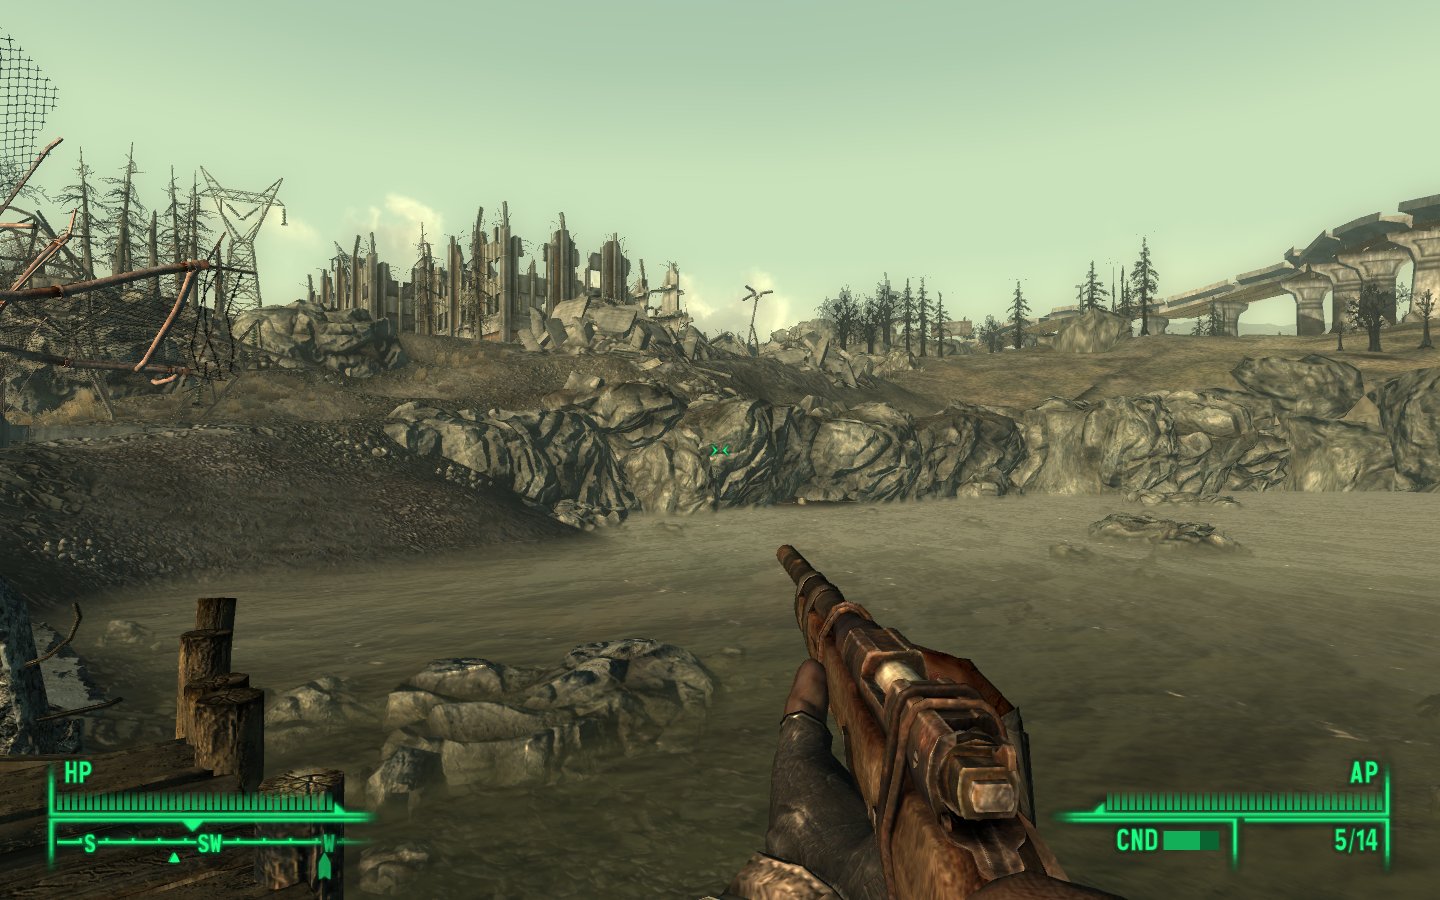 Fallout какой год в игре. Игра Fallout 3. Fallout 3 Wasteland Edition. Fallout 3 системные требования. Фоллаут 3 и 4.